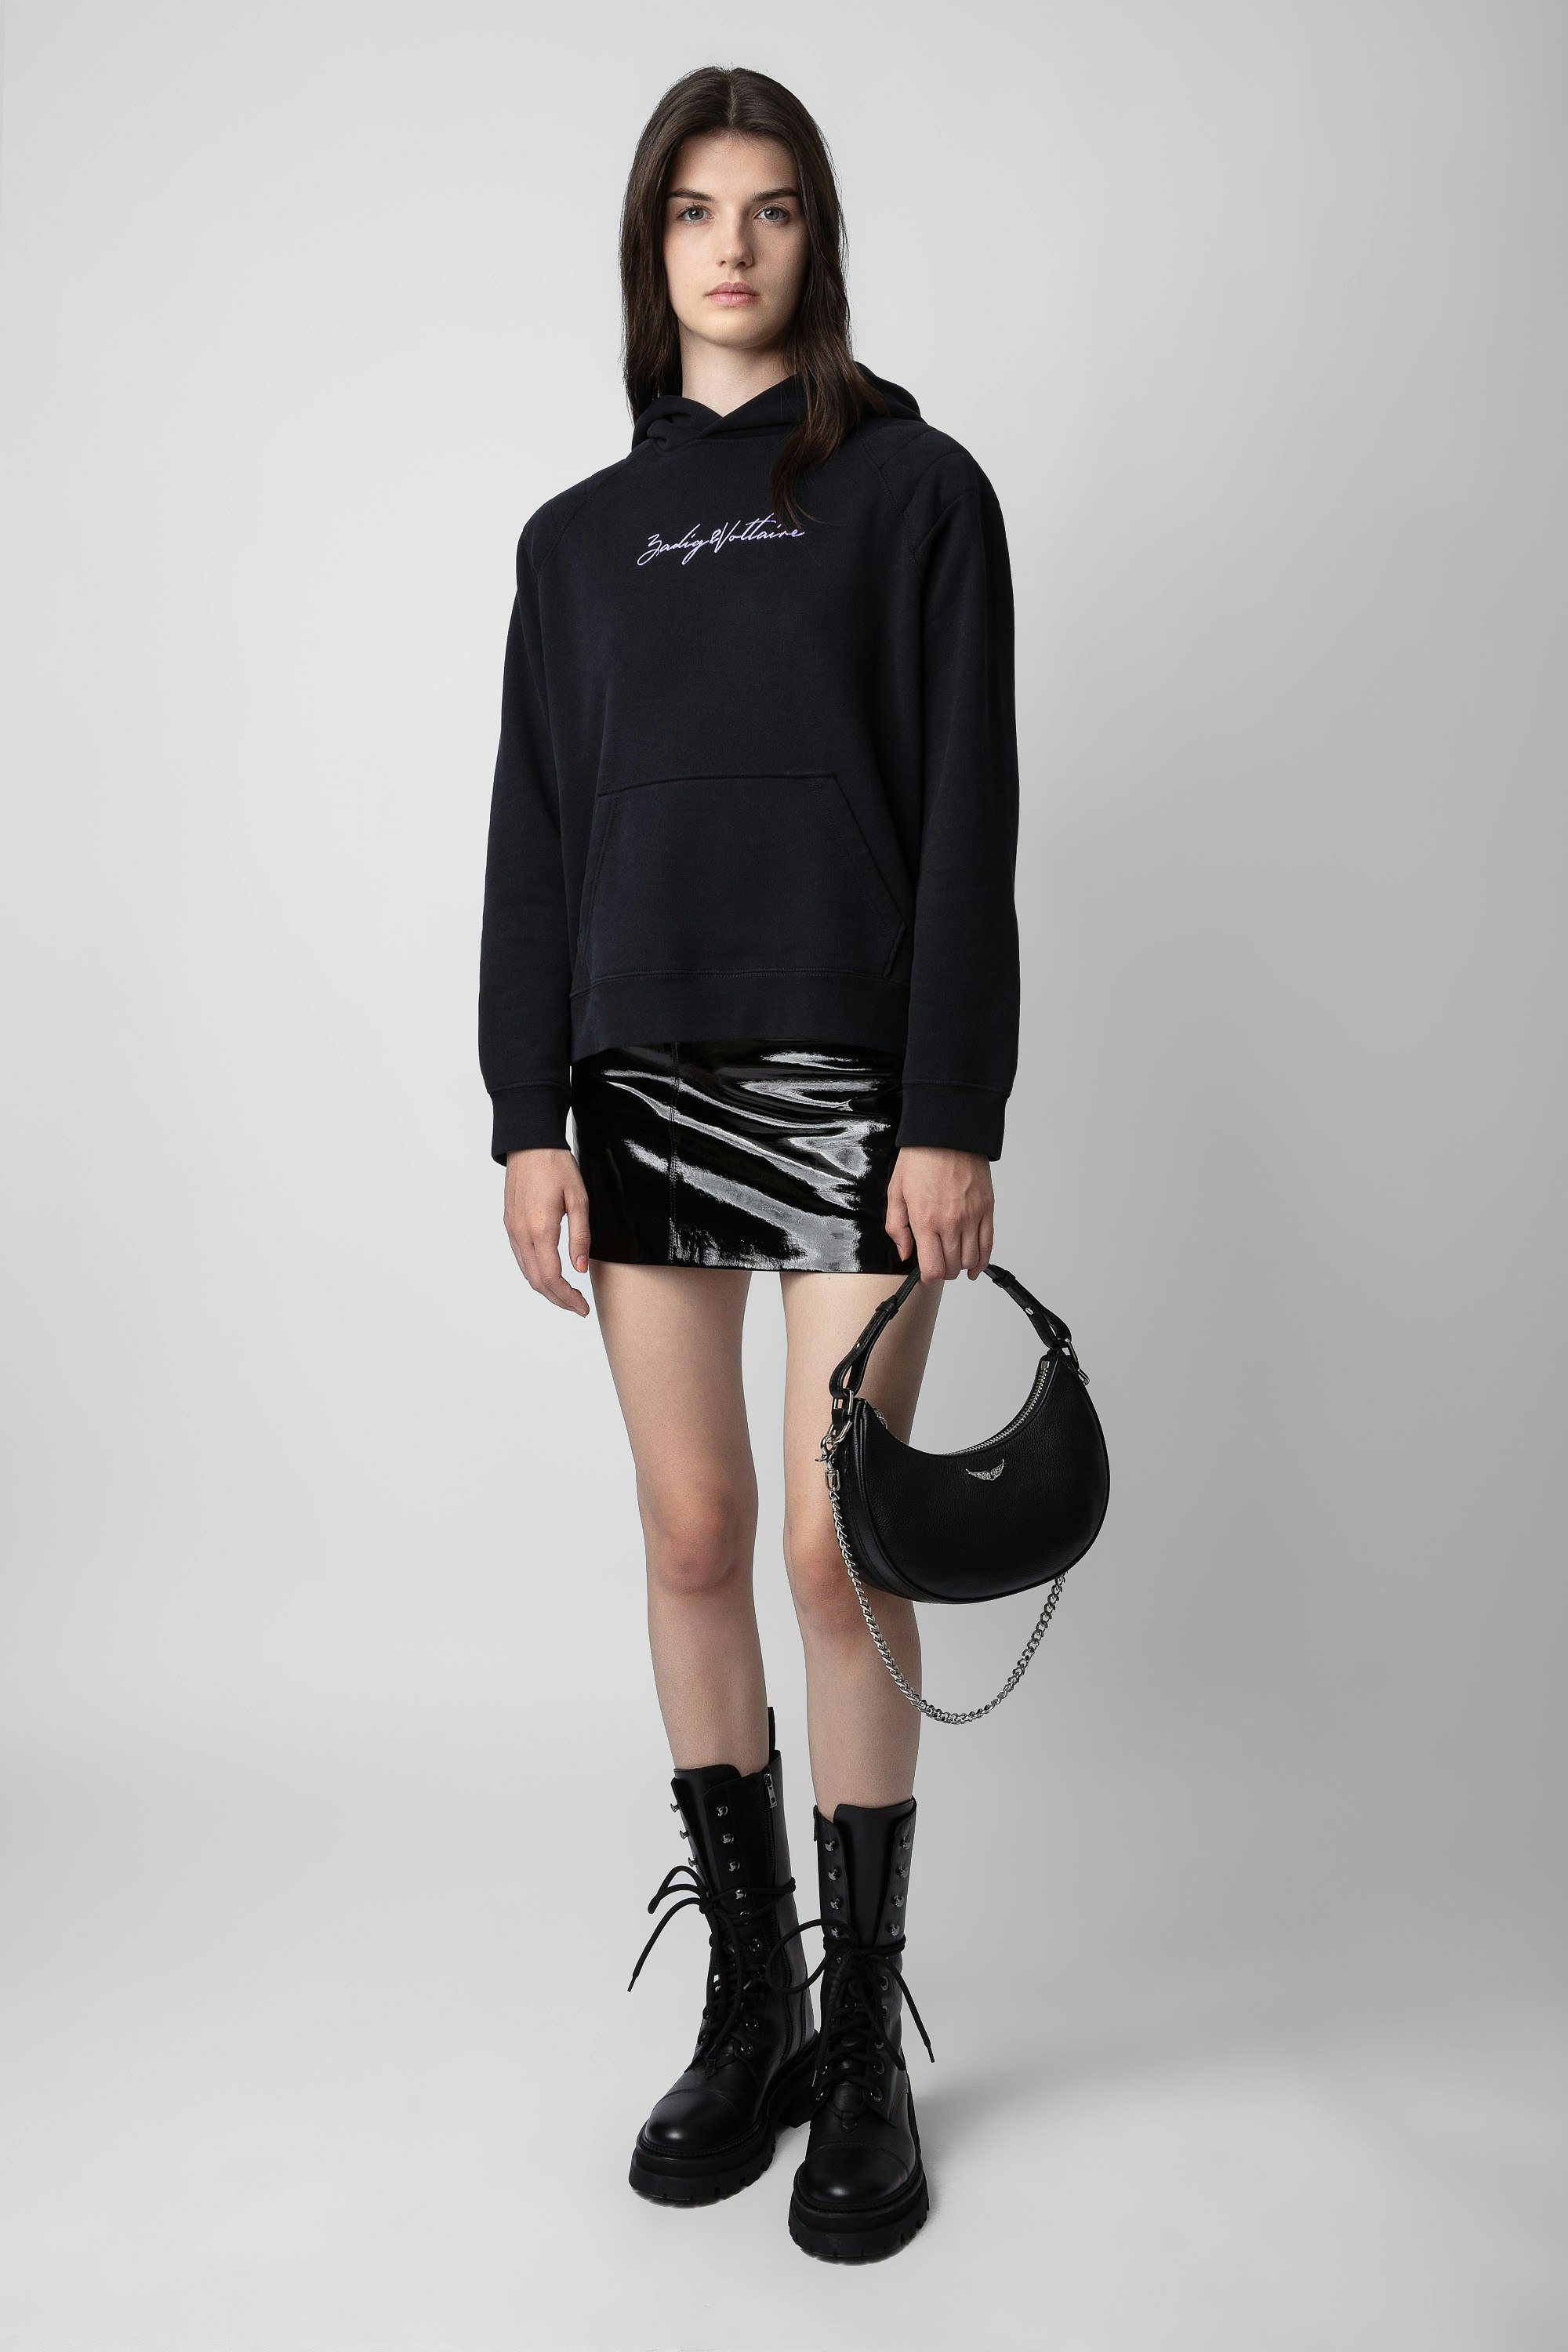 Evata Sweatshirt - Women’s black hoodie with ZV signature and concert wings print.